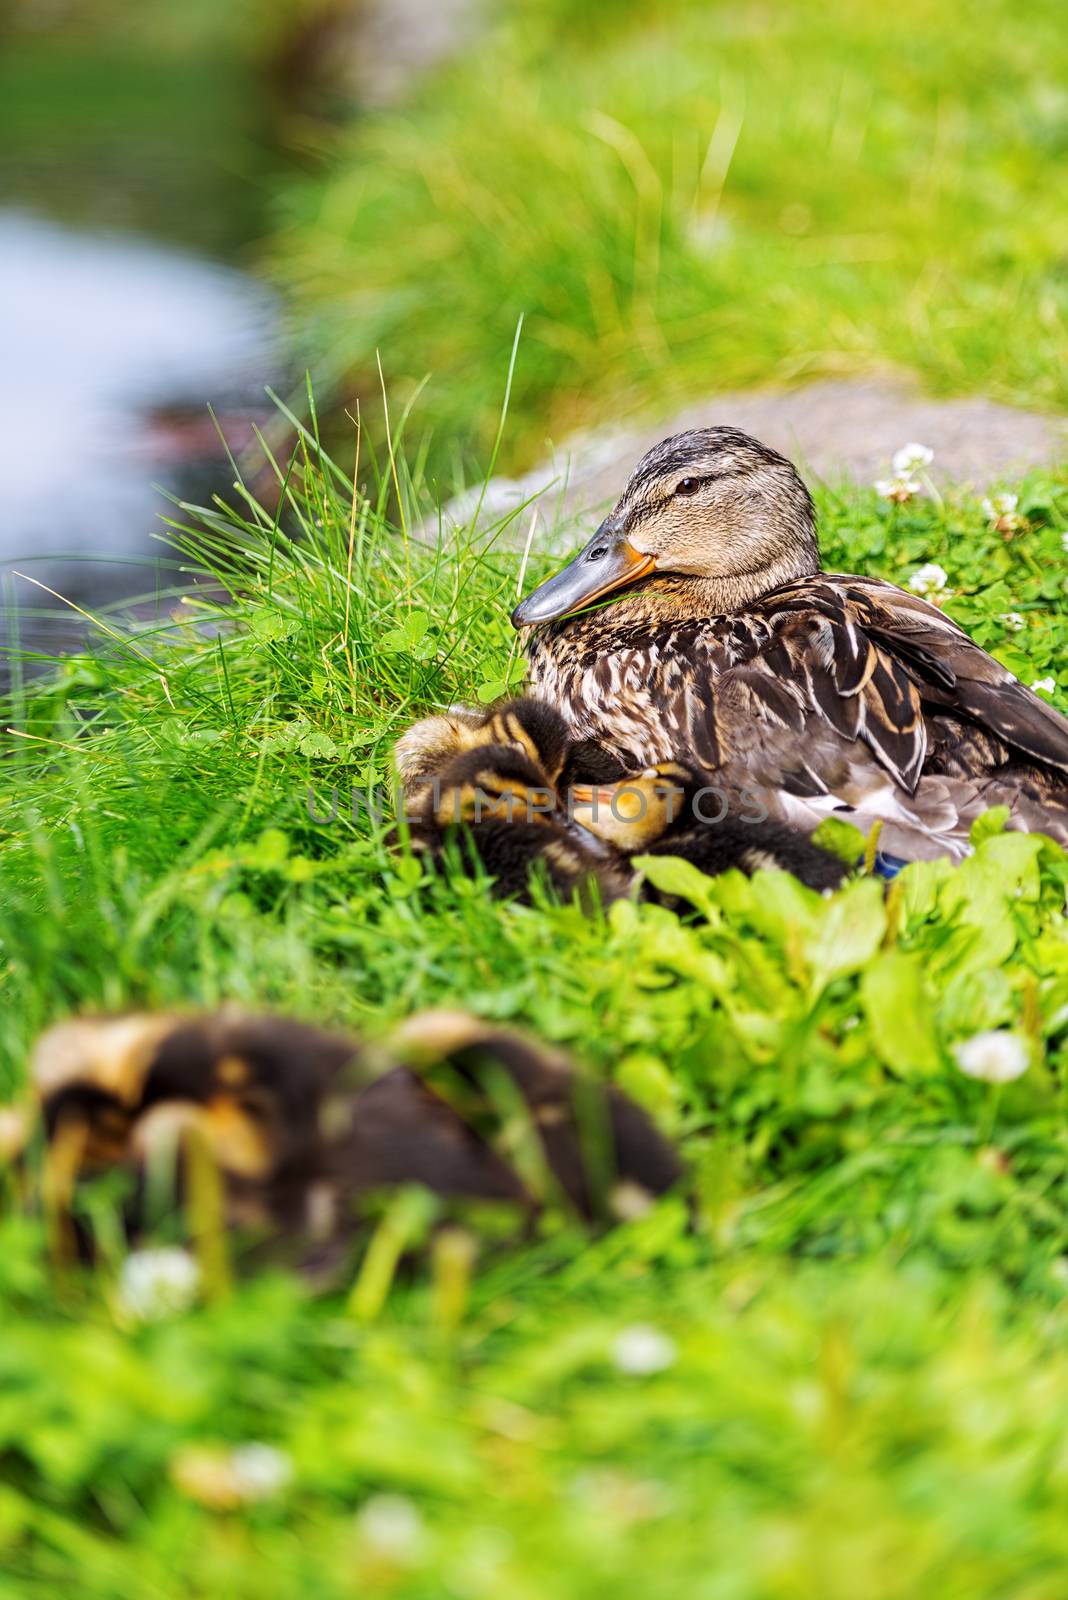 Family of ducks on grass by Nanisimova